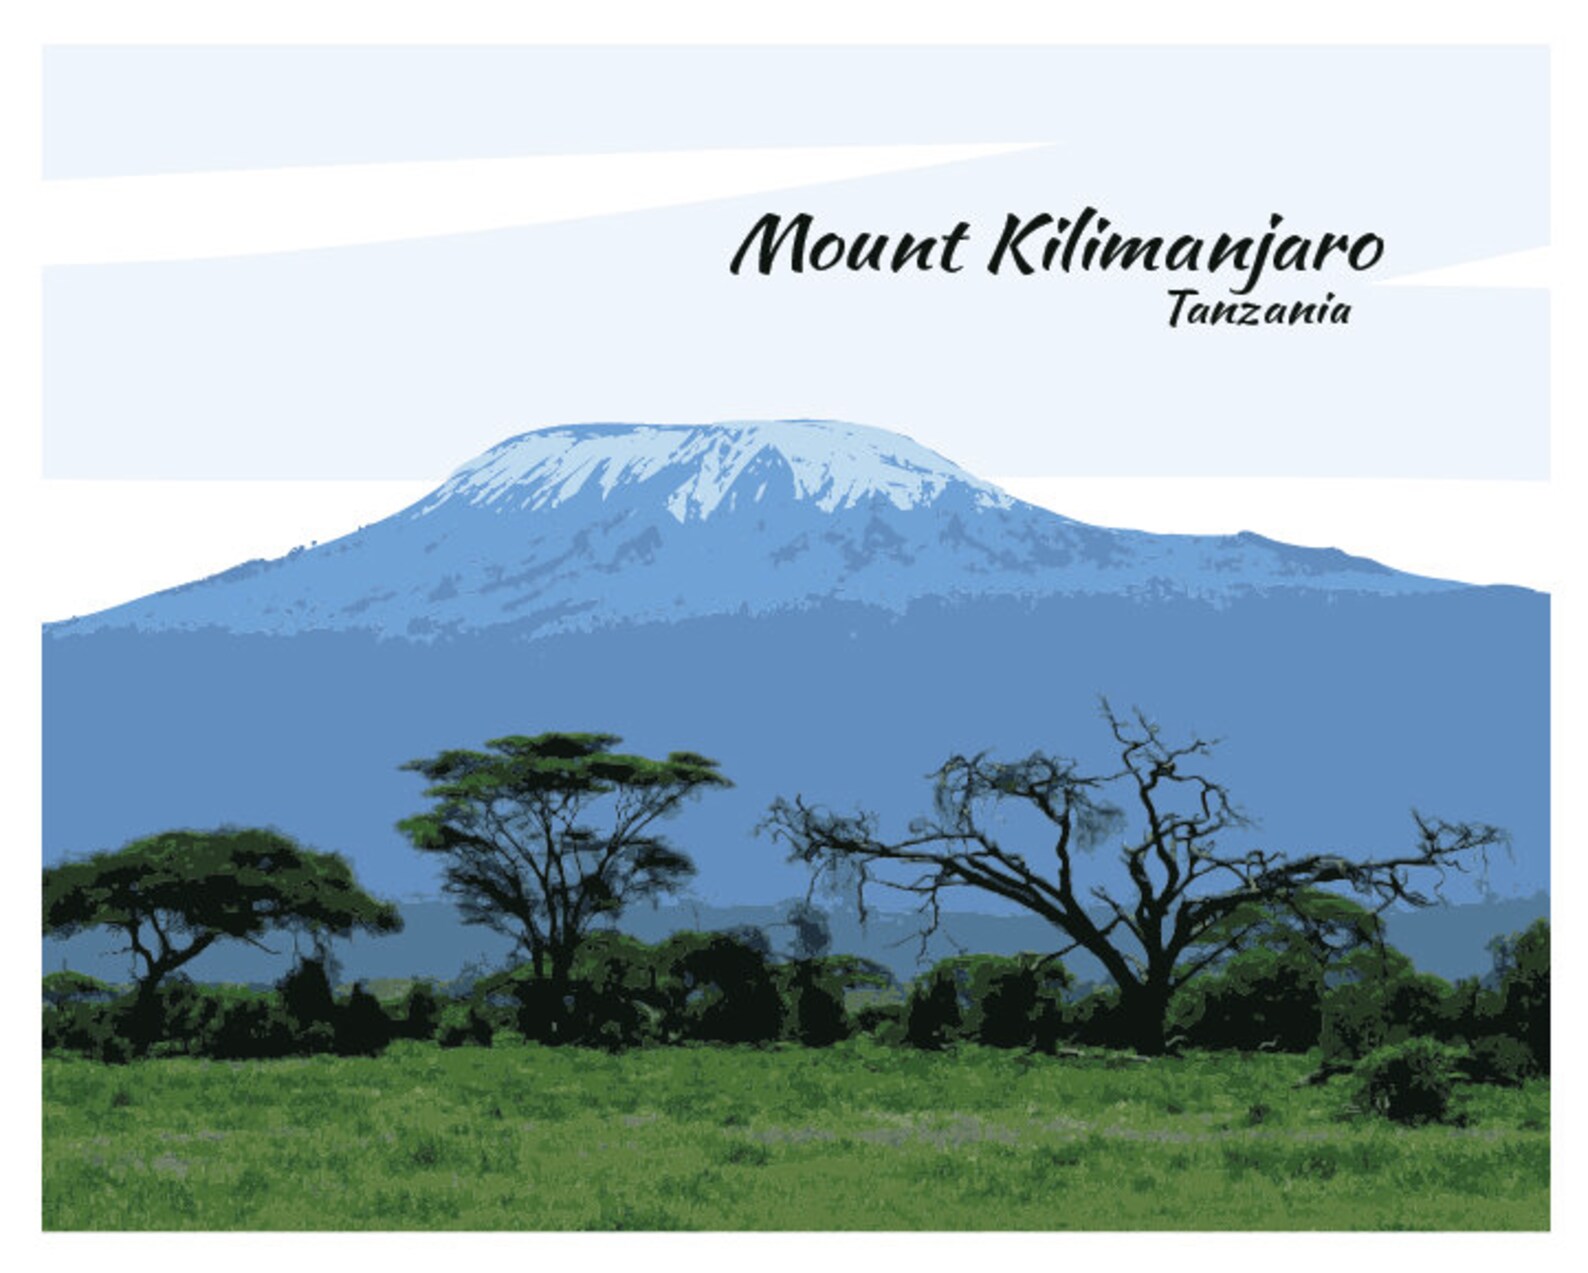 Mount Kilimanjaro / African Art Print / Tanzania Gift | Etsy